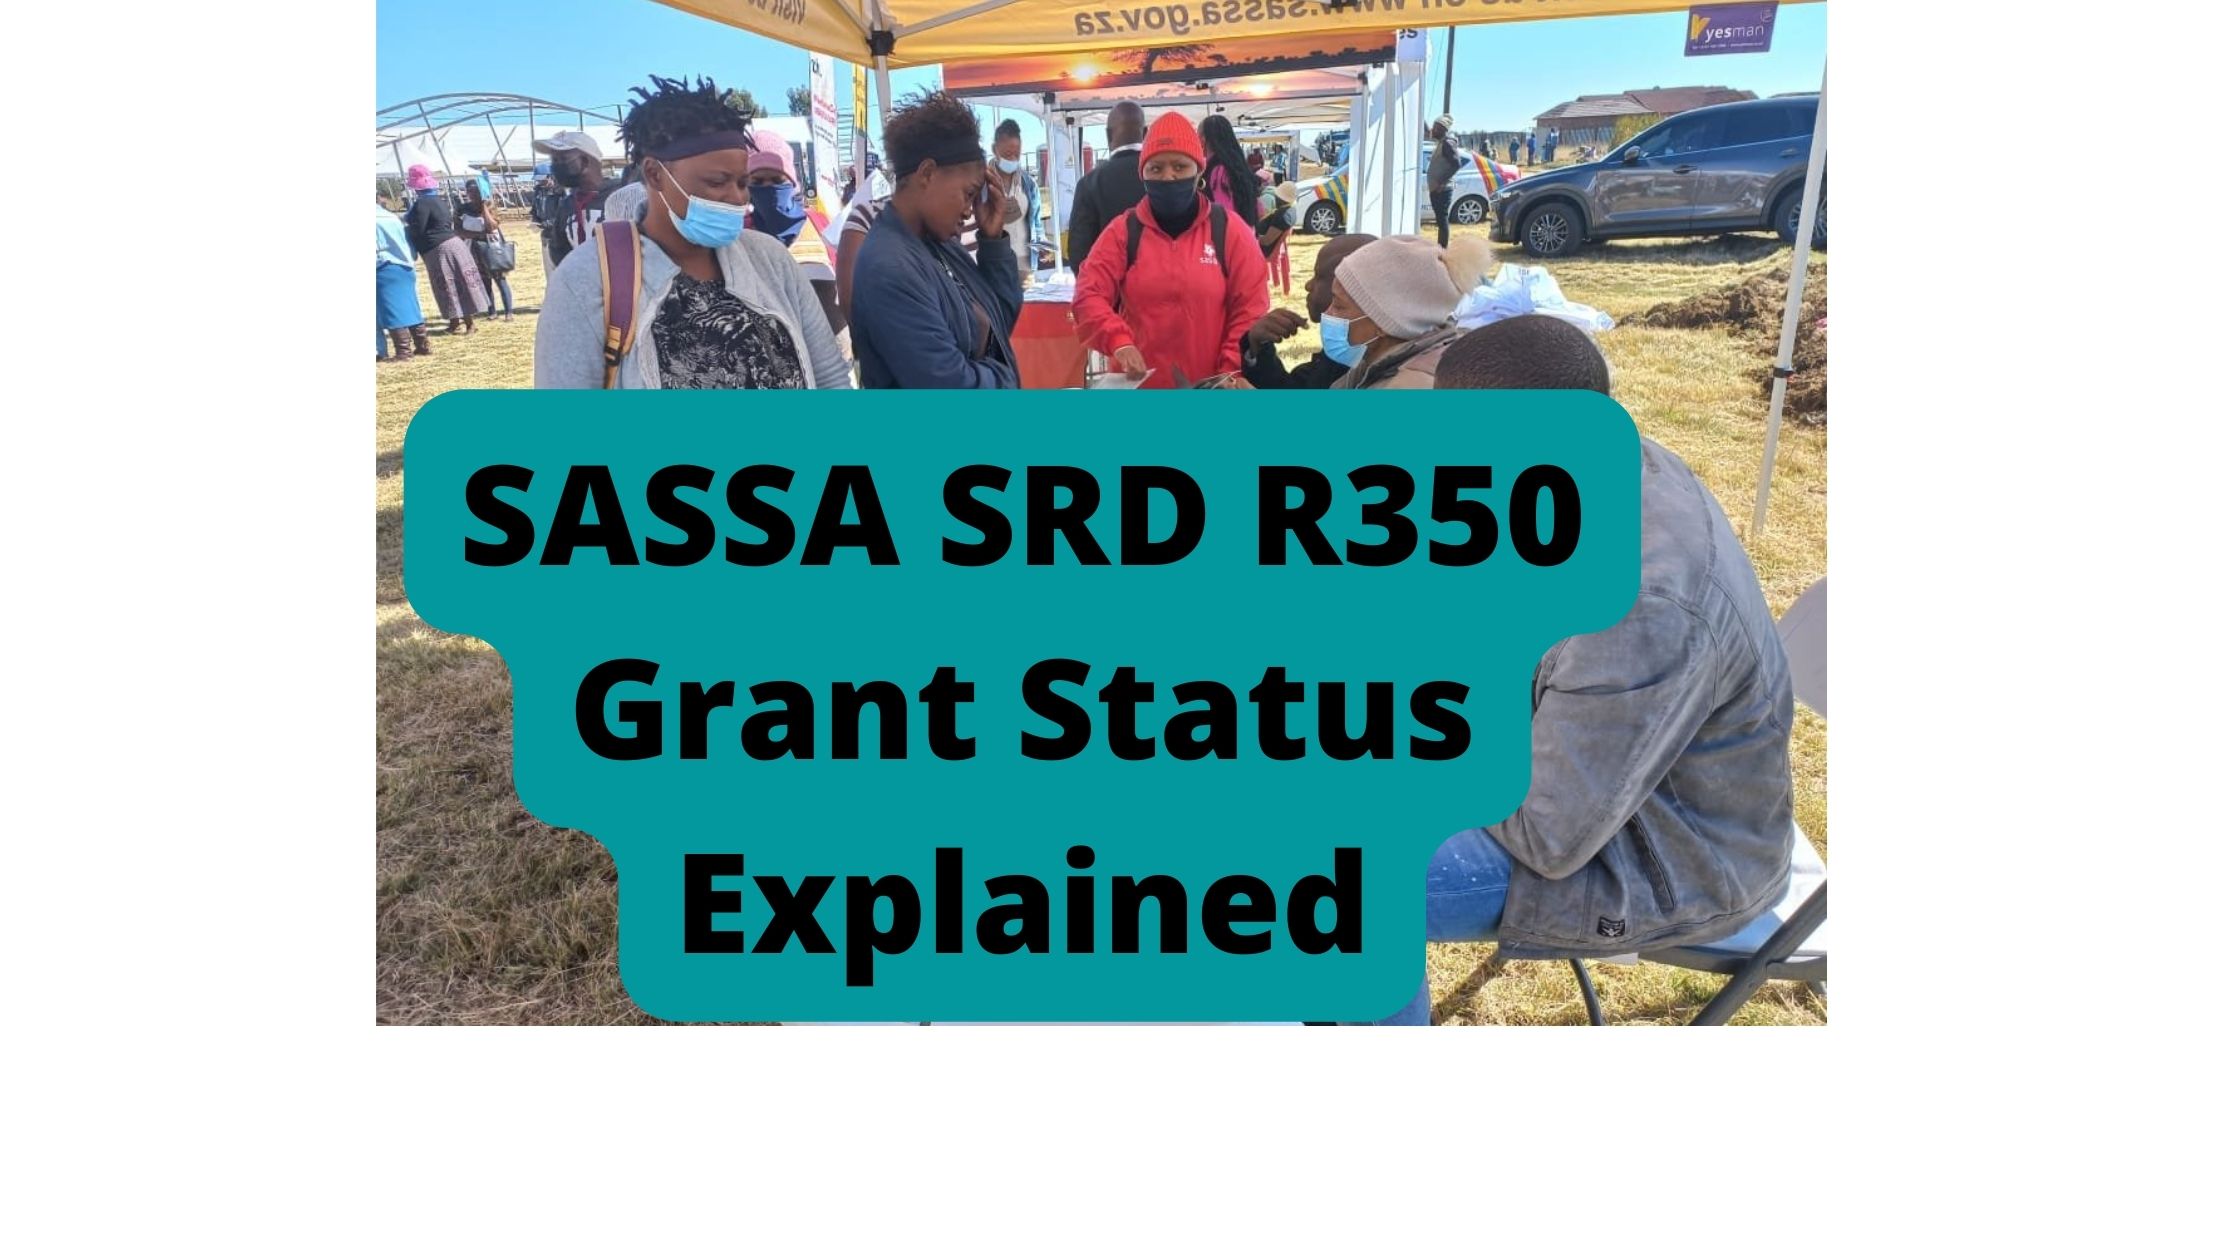 SASSA SRD R350 Grant Status Explained